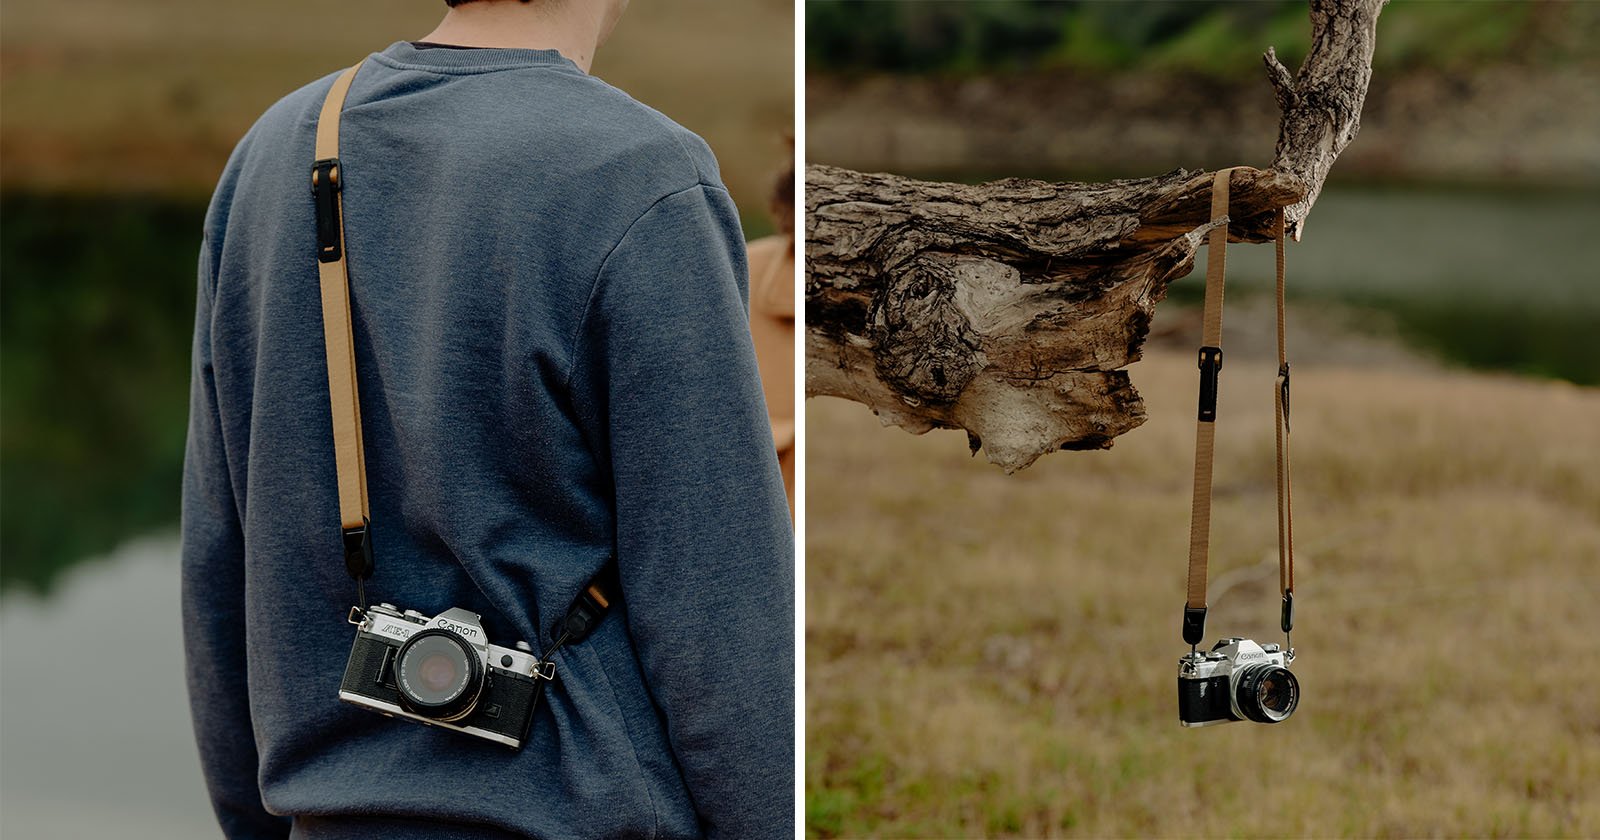  peak design launches its camera straps coyote 